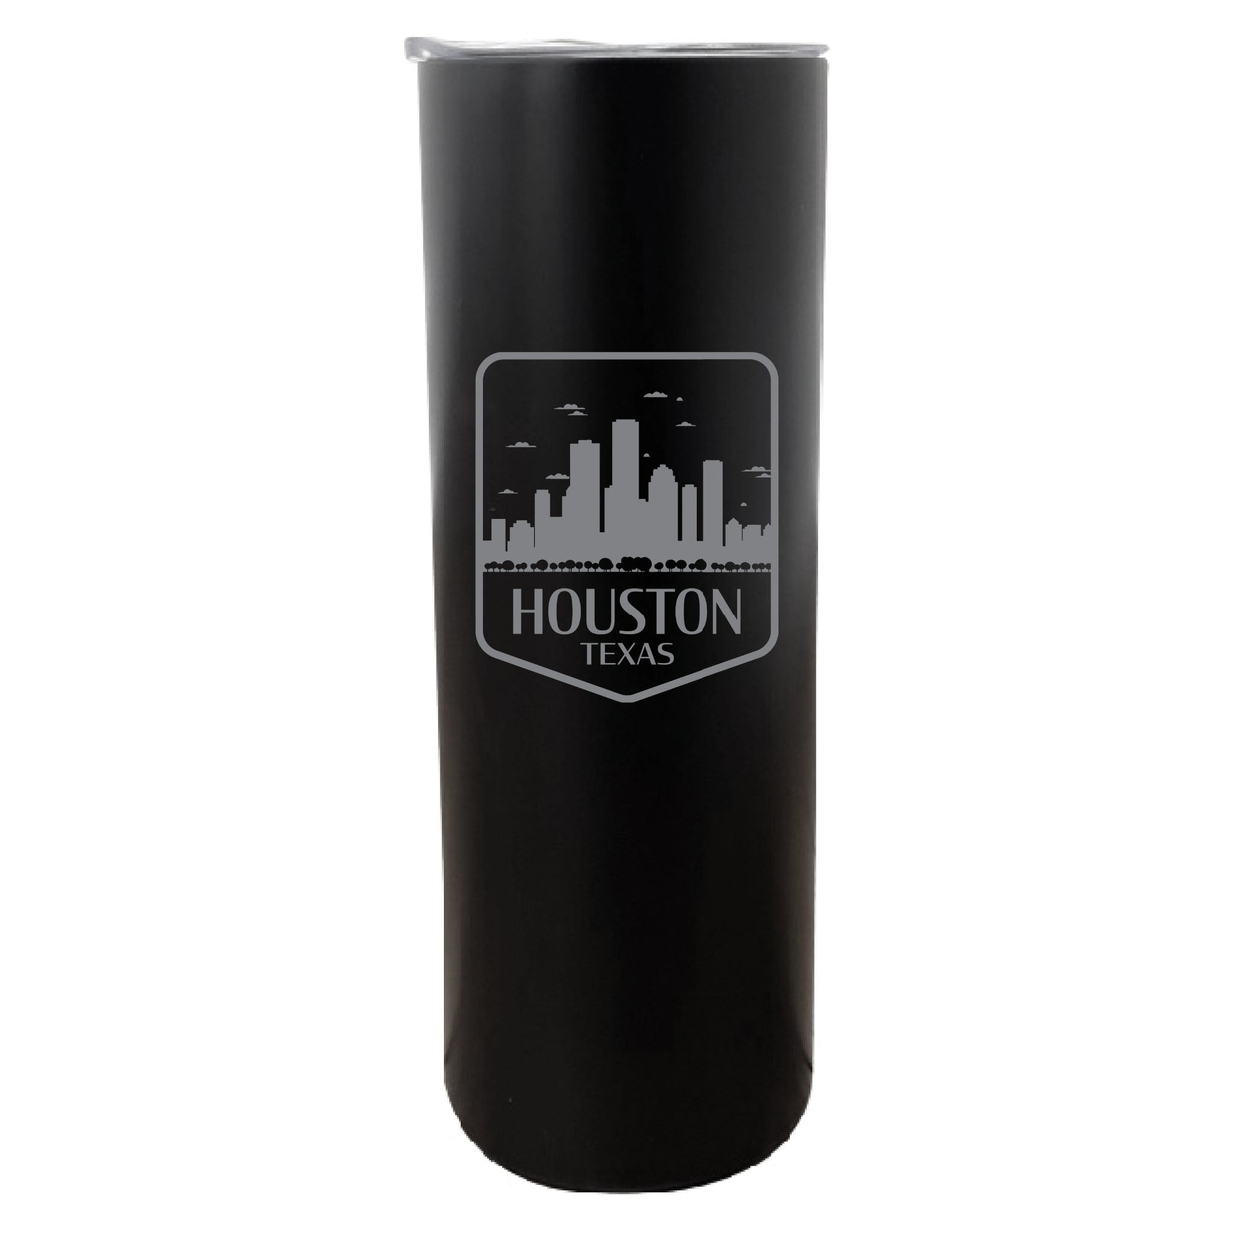 Houston Texas Souvenir 20 Oz Engraved Insulated Stainless Steel Skinny Tumbler - Black,,4-Pack